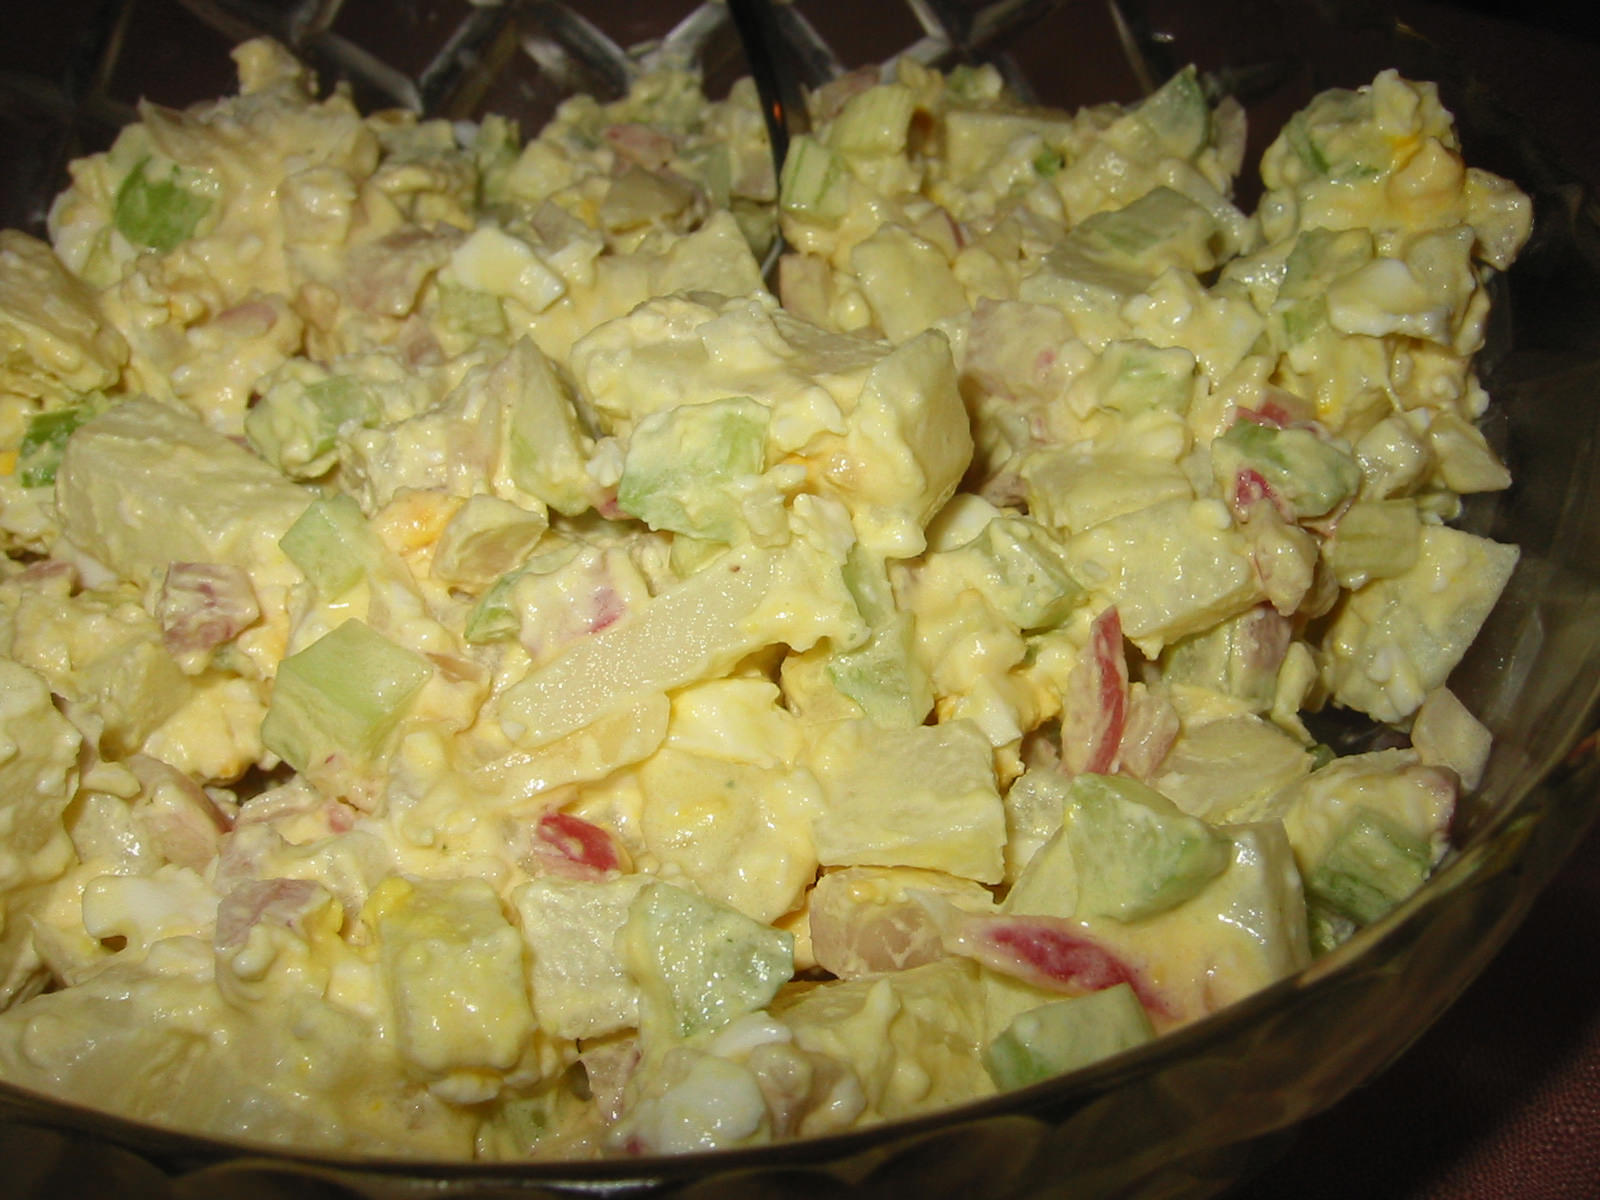 Potato salad made with french onion soup mix